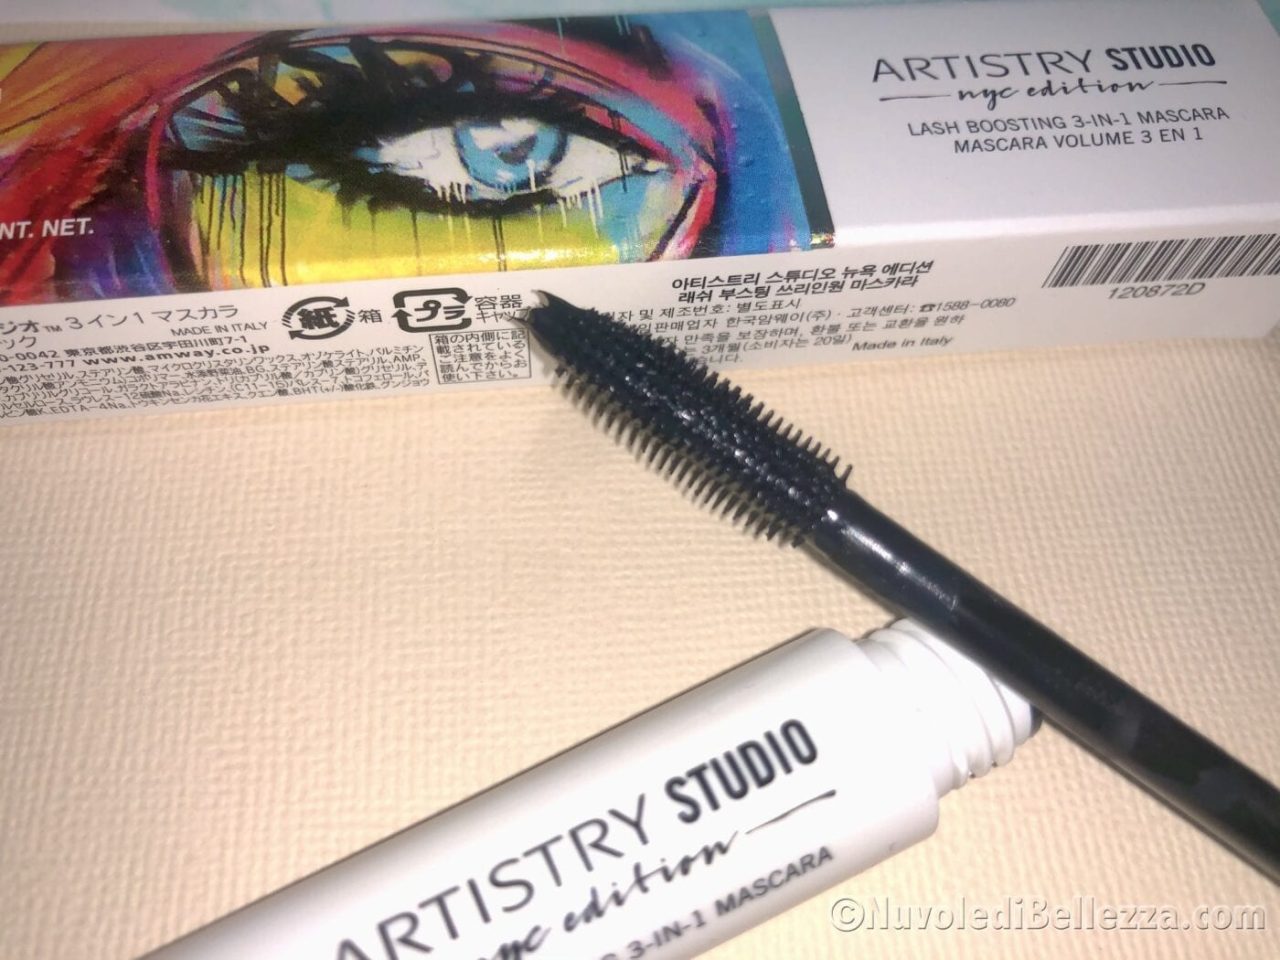 Mascara Volumizzante 3-in-1 - Gotham Black ARTISTRY STUDIO™ NYC Edition - 29,82 €